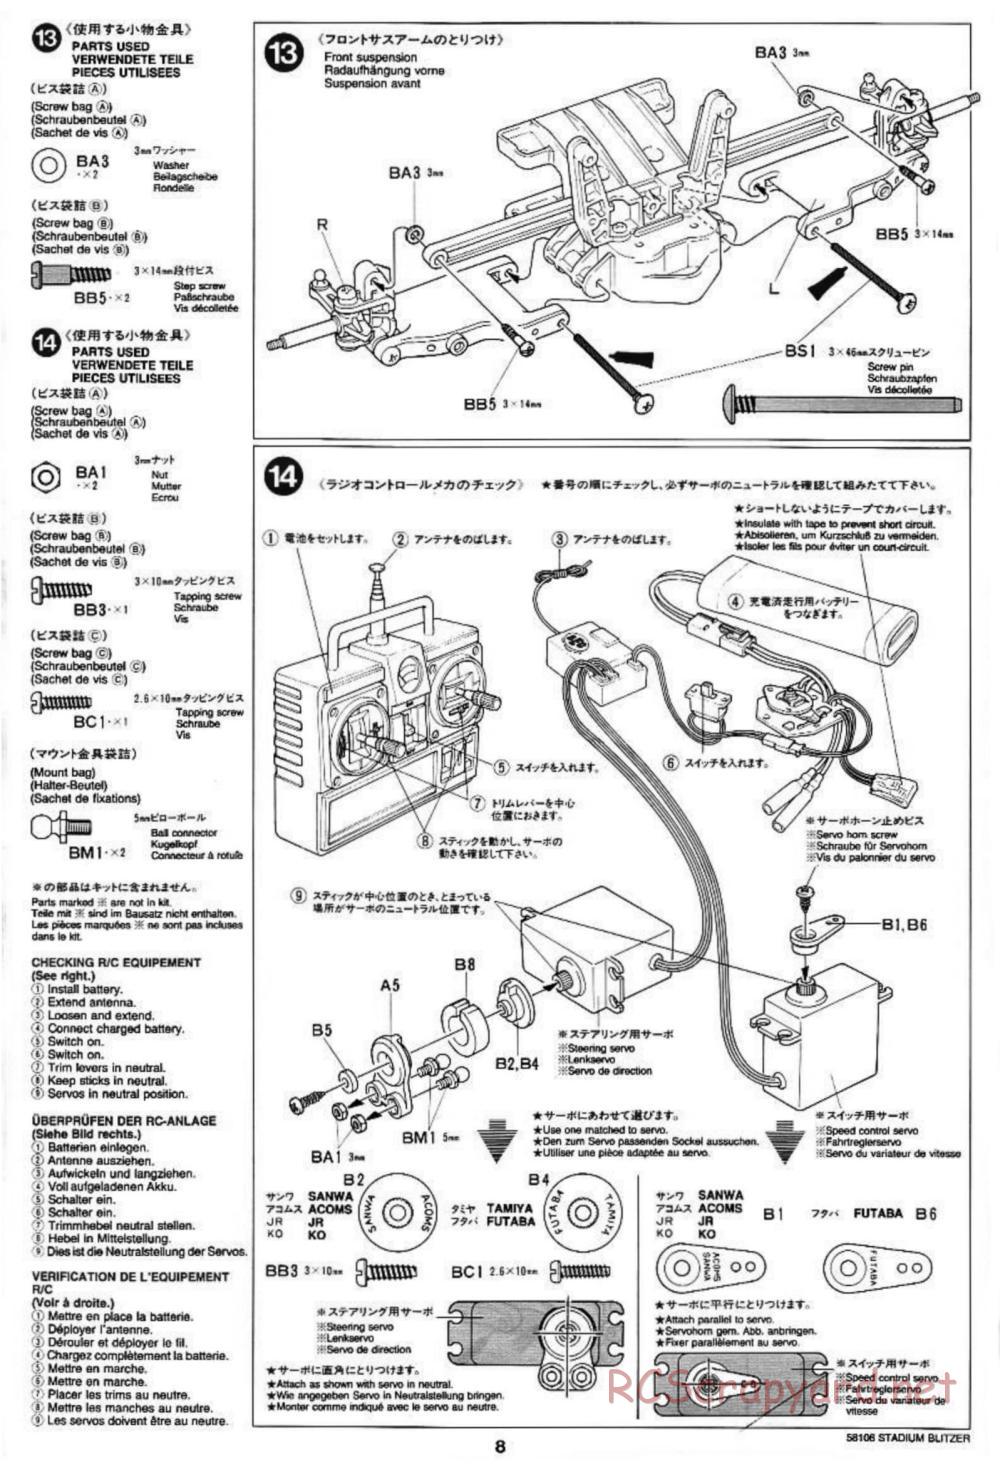 Tamiya - Stadium Blitzer Chassis - Manual - Page 8